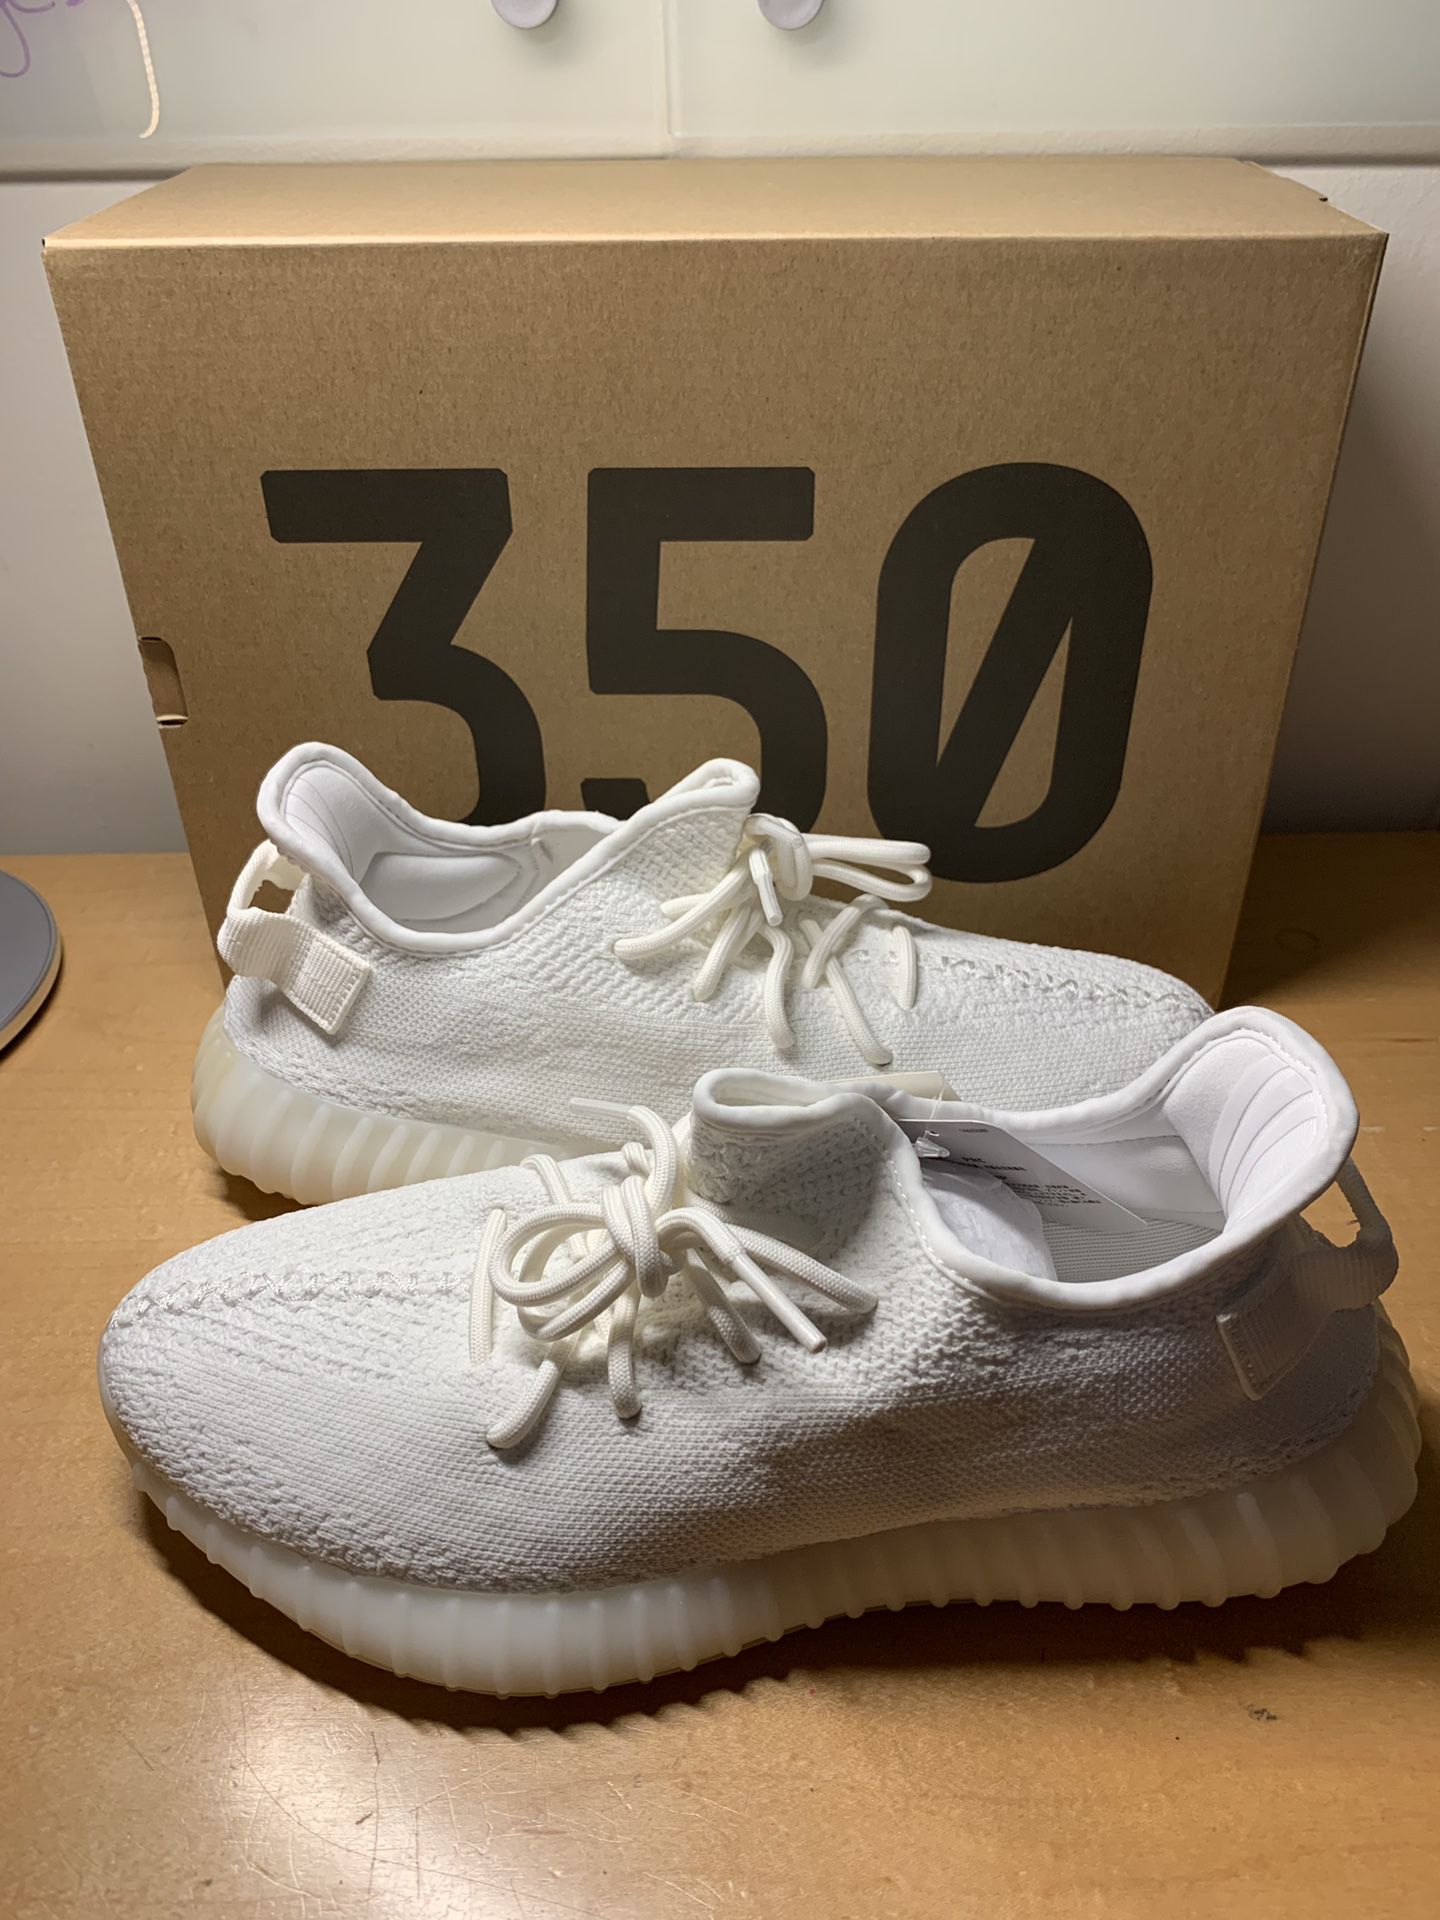 Adidas Yeezy Boost 350 V2 Kanye West ‘Cream White’ Brand New Sz 9.5 Shoe